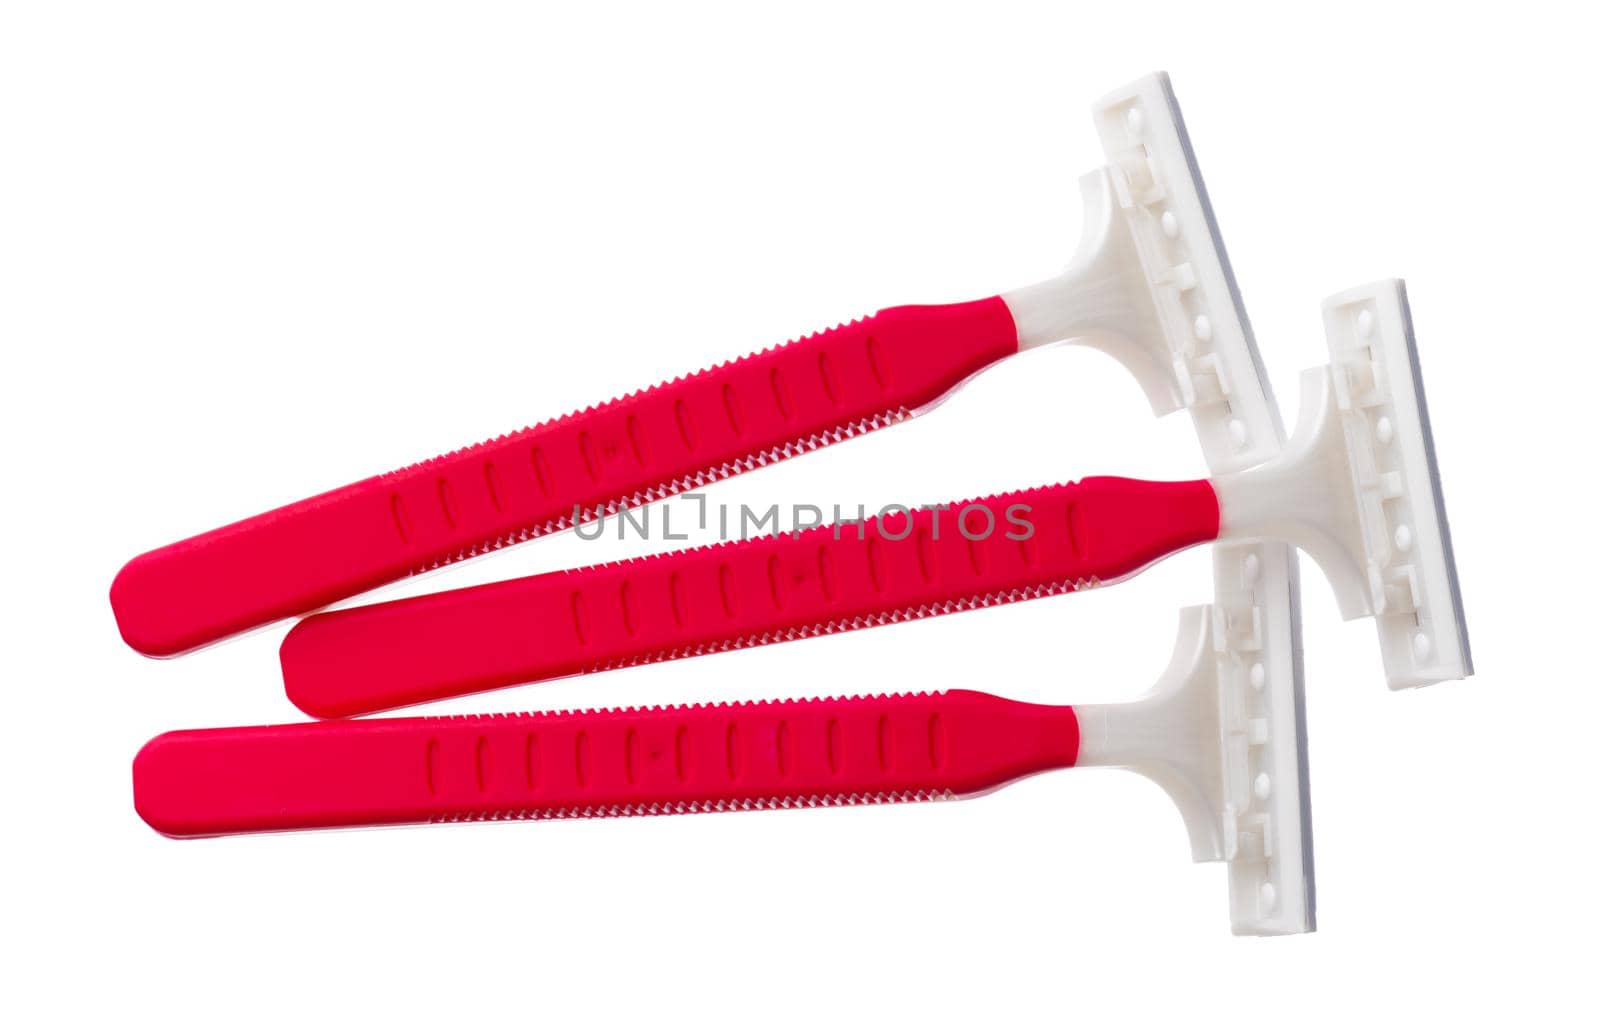 Set of disposable shaver razors isolated on white background by Fabrikasimf